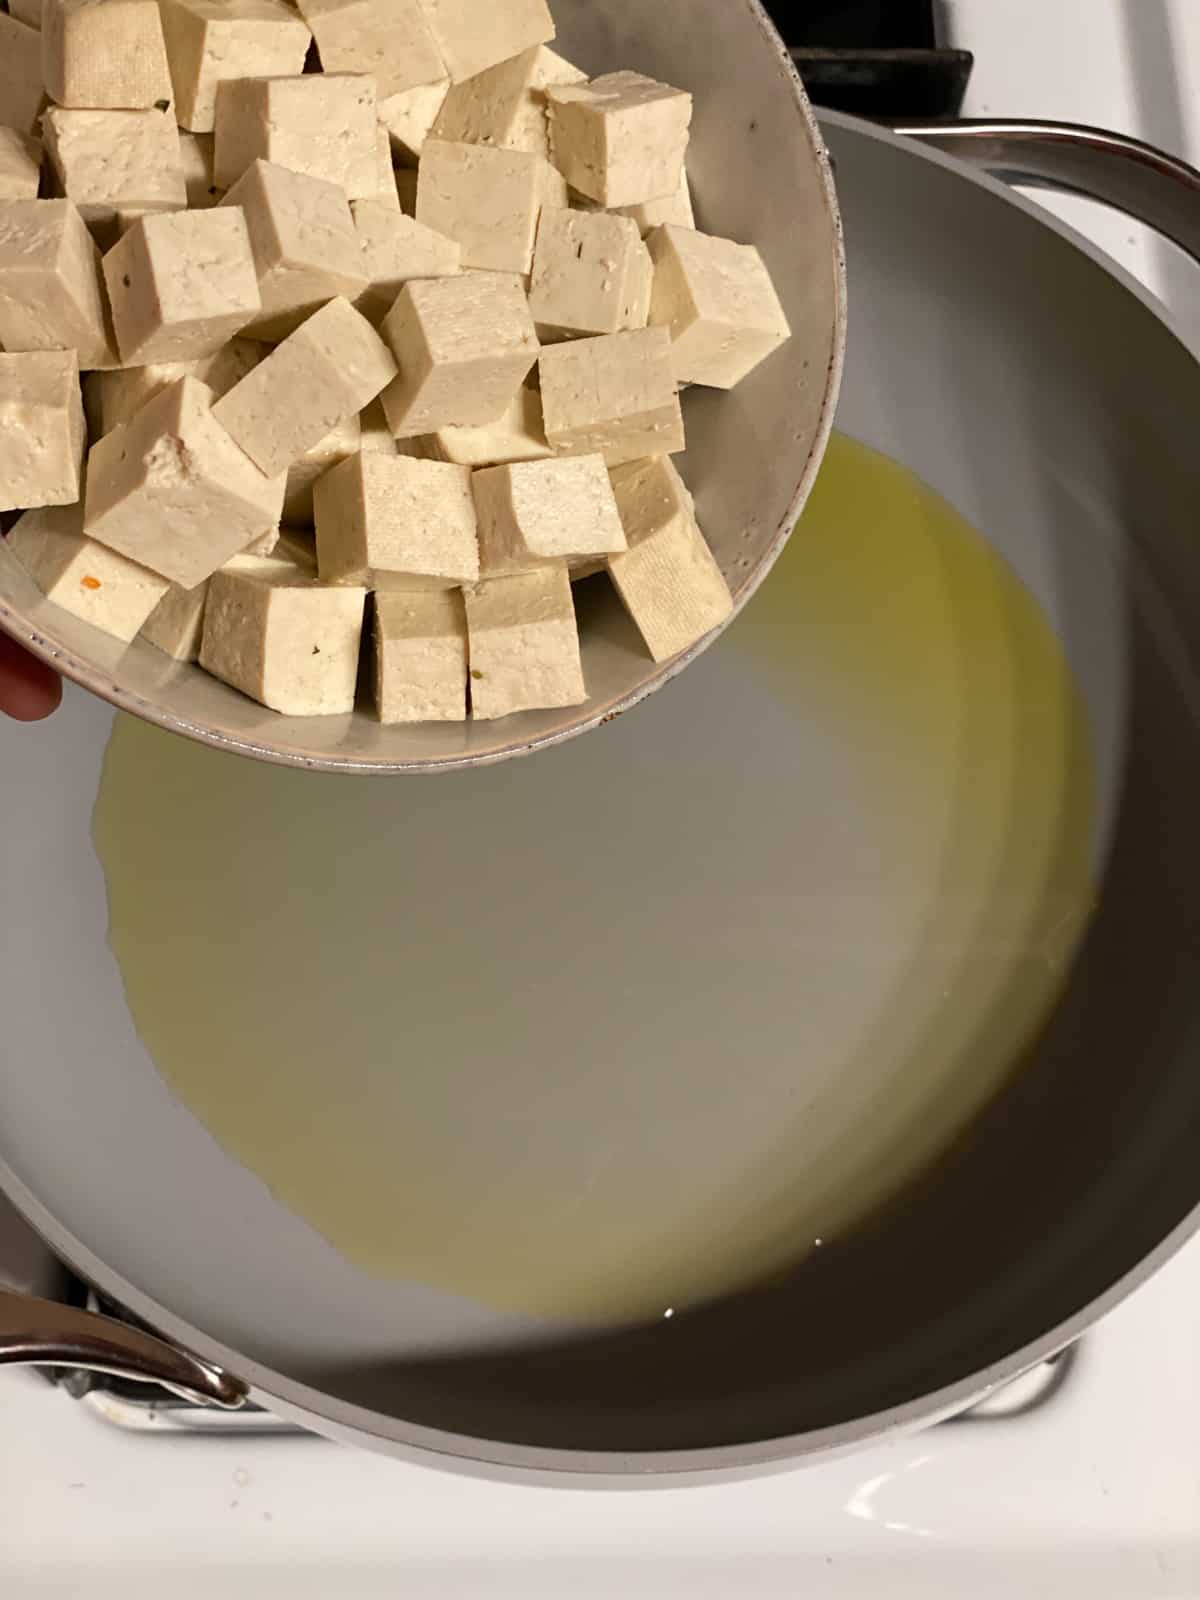 process shot of adding tofu to pan